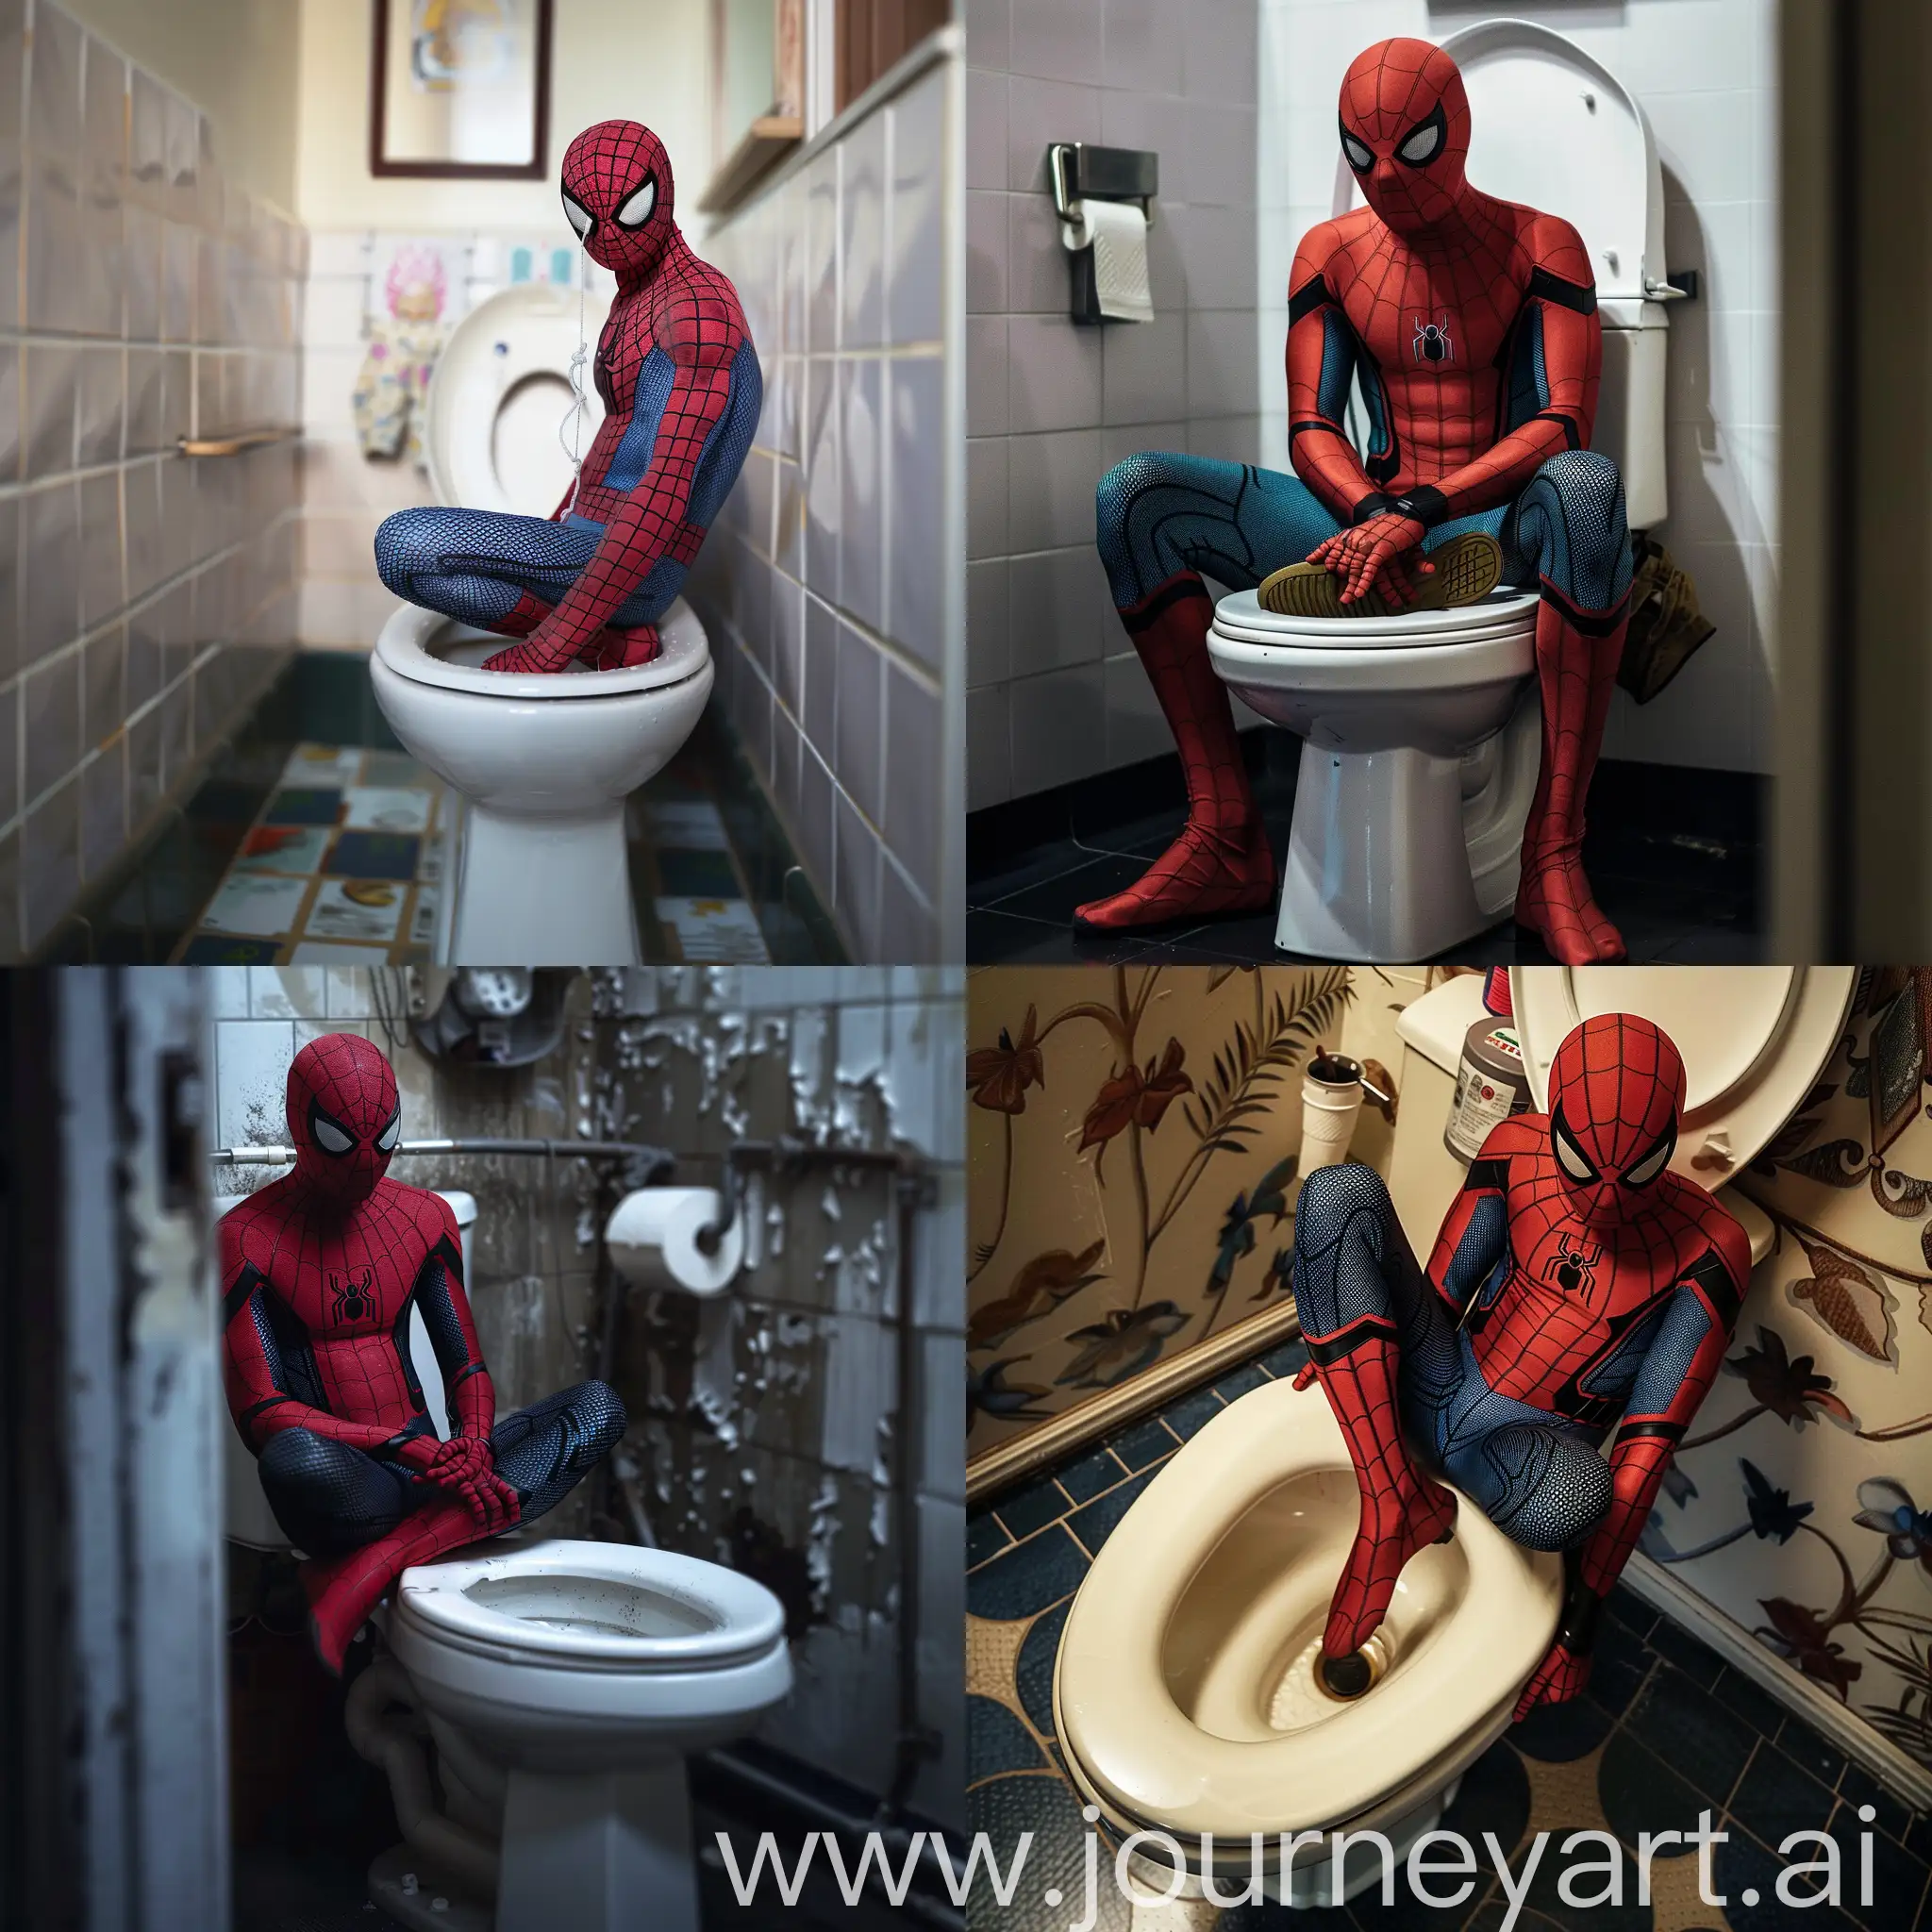 Spiderman-Taking-a-Break-on-the-Toilet